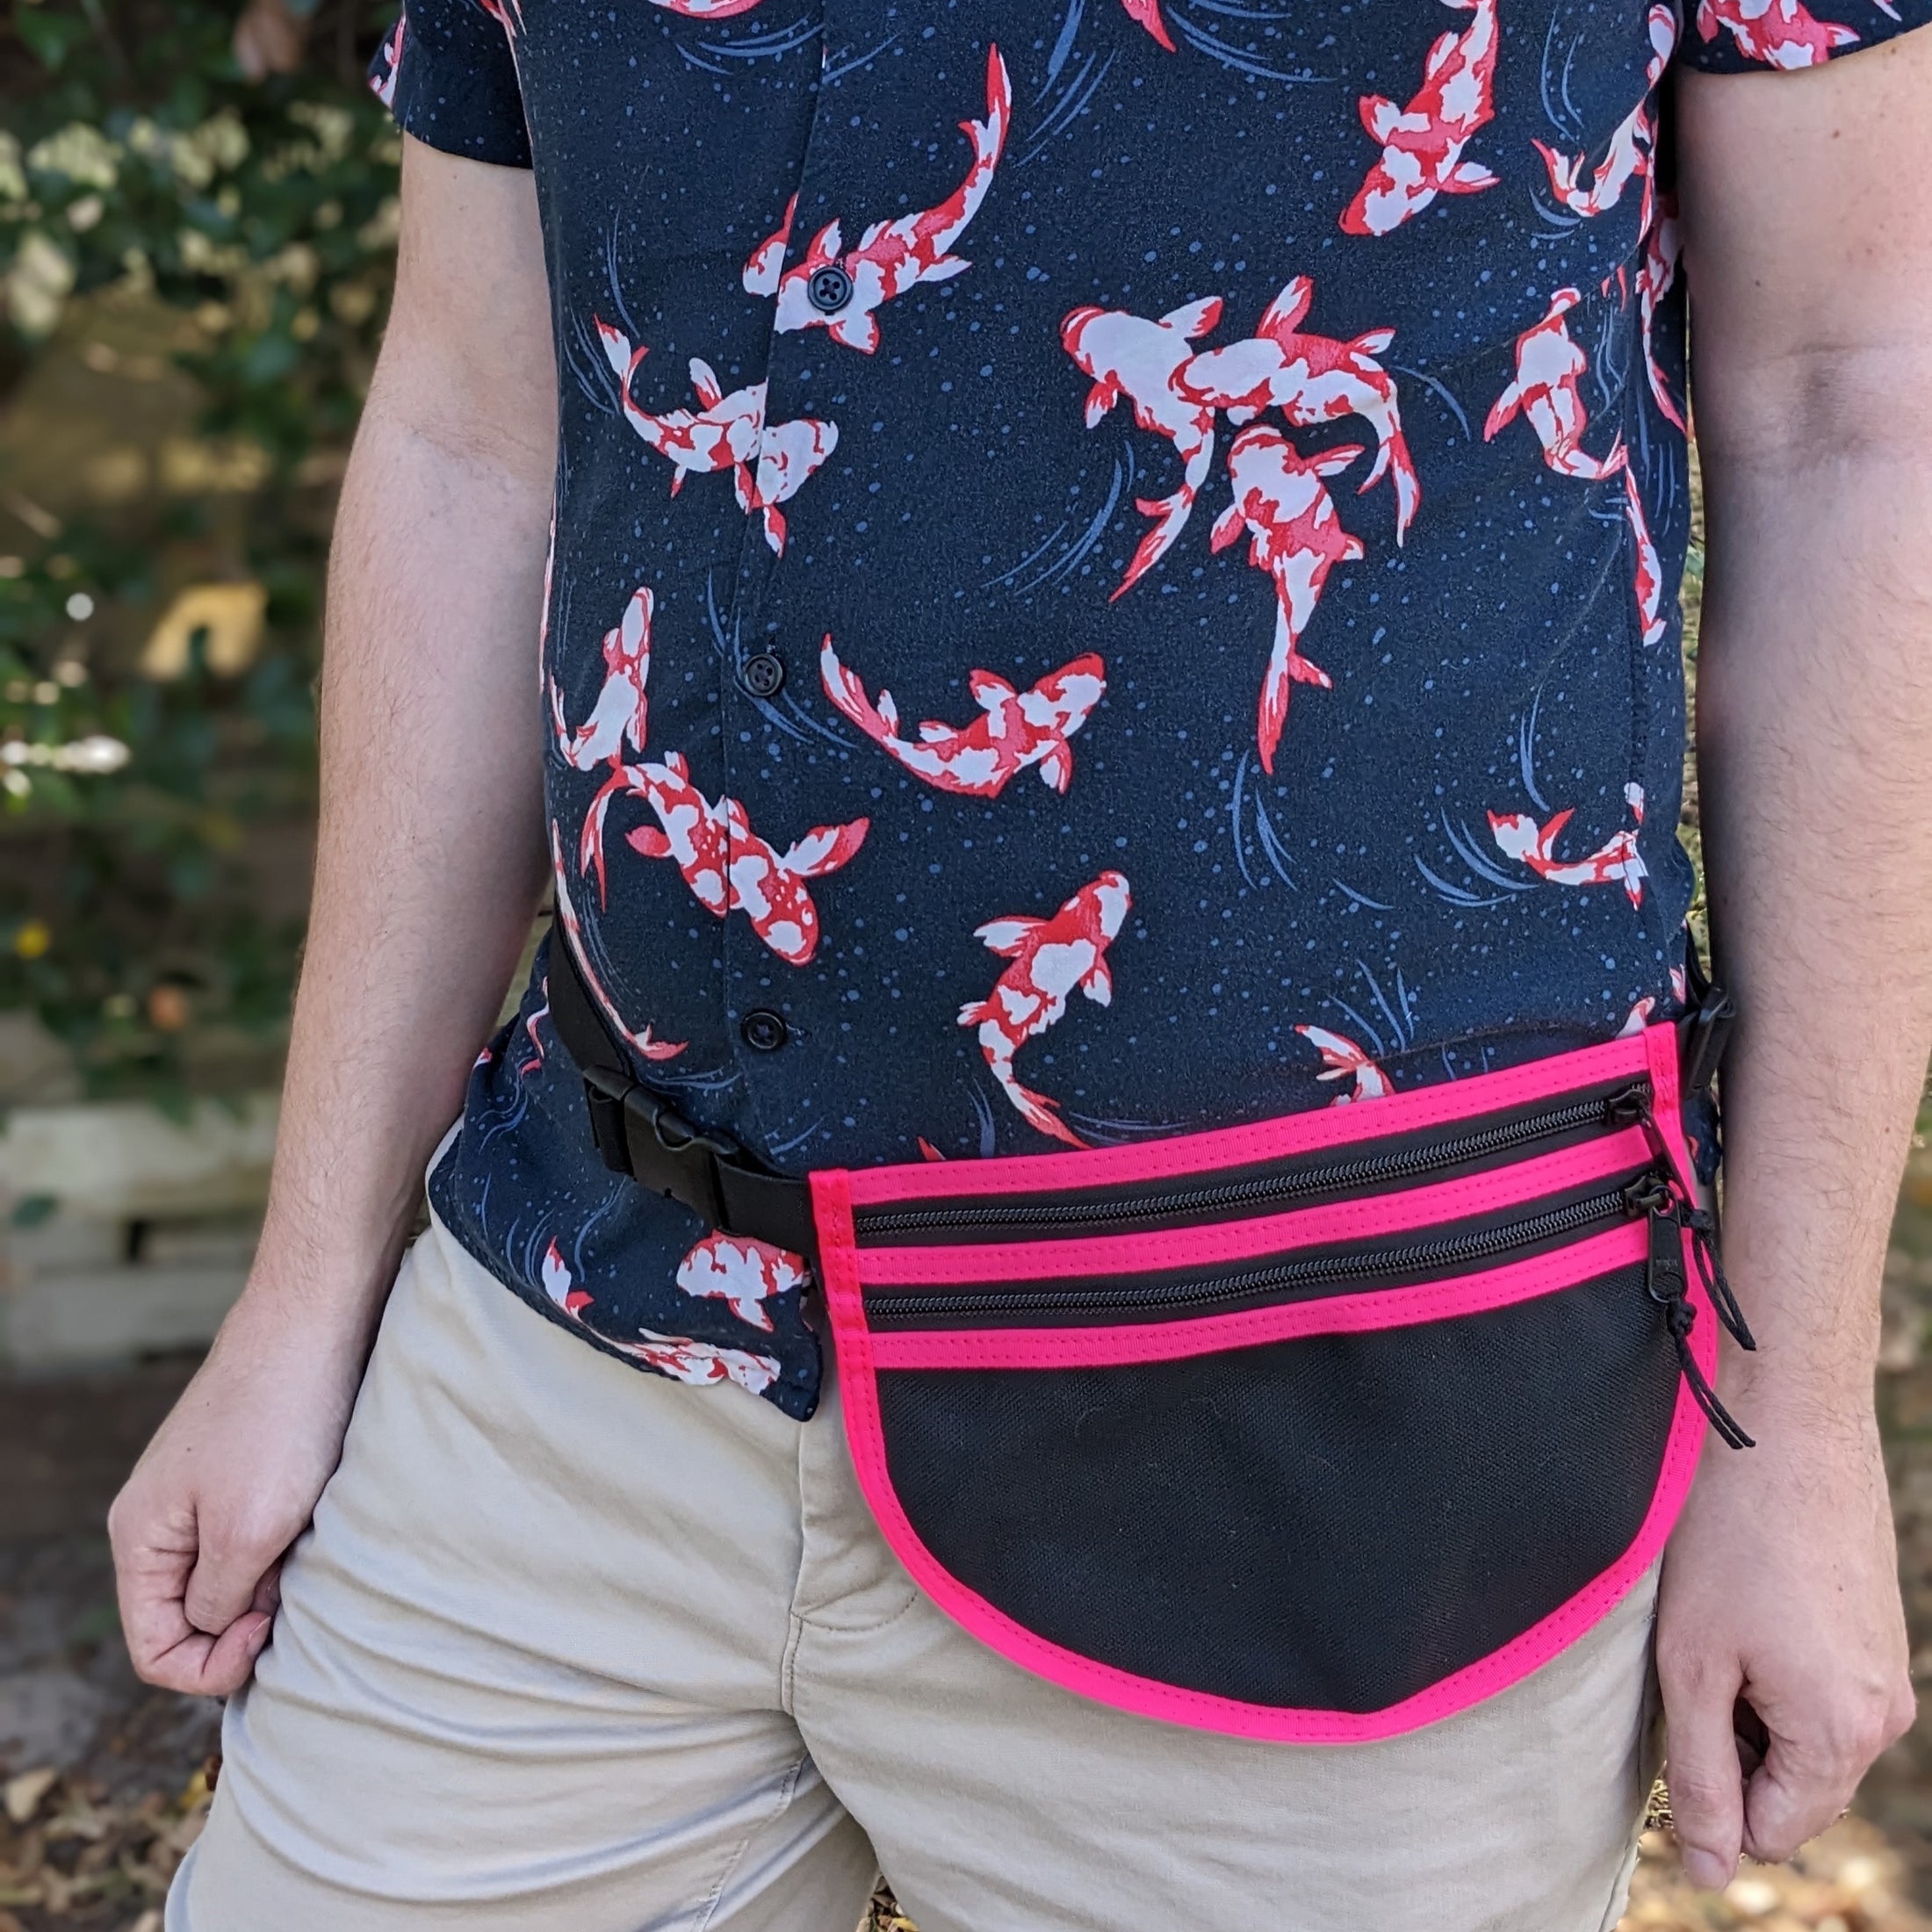 Black Cordura and Neon Pink Binding Waist/Cross Body Bag